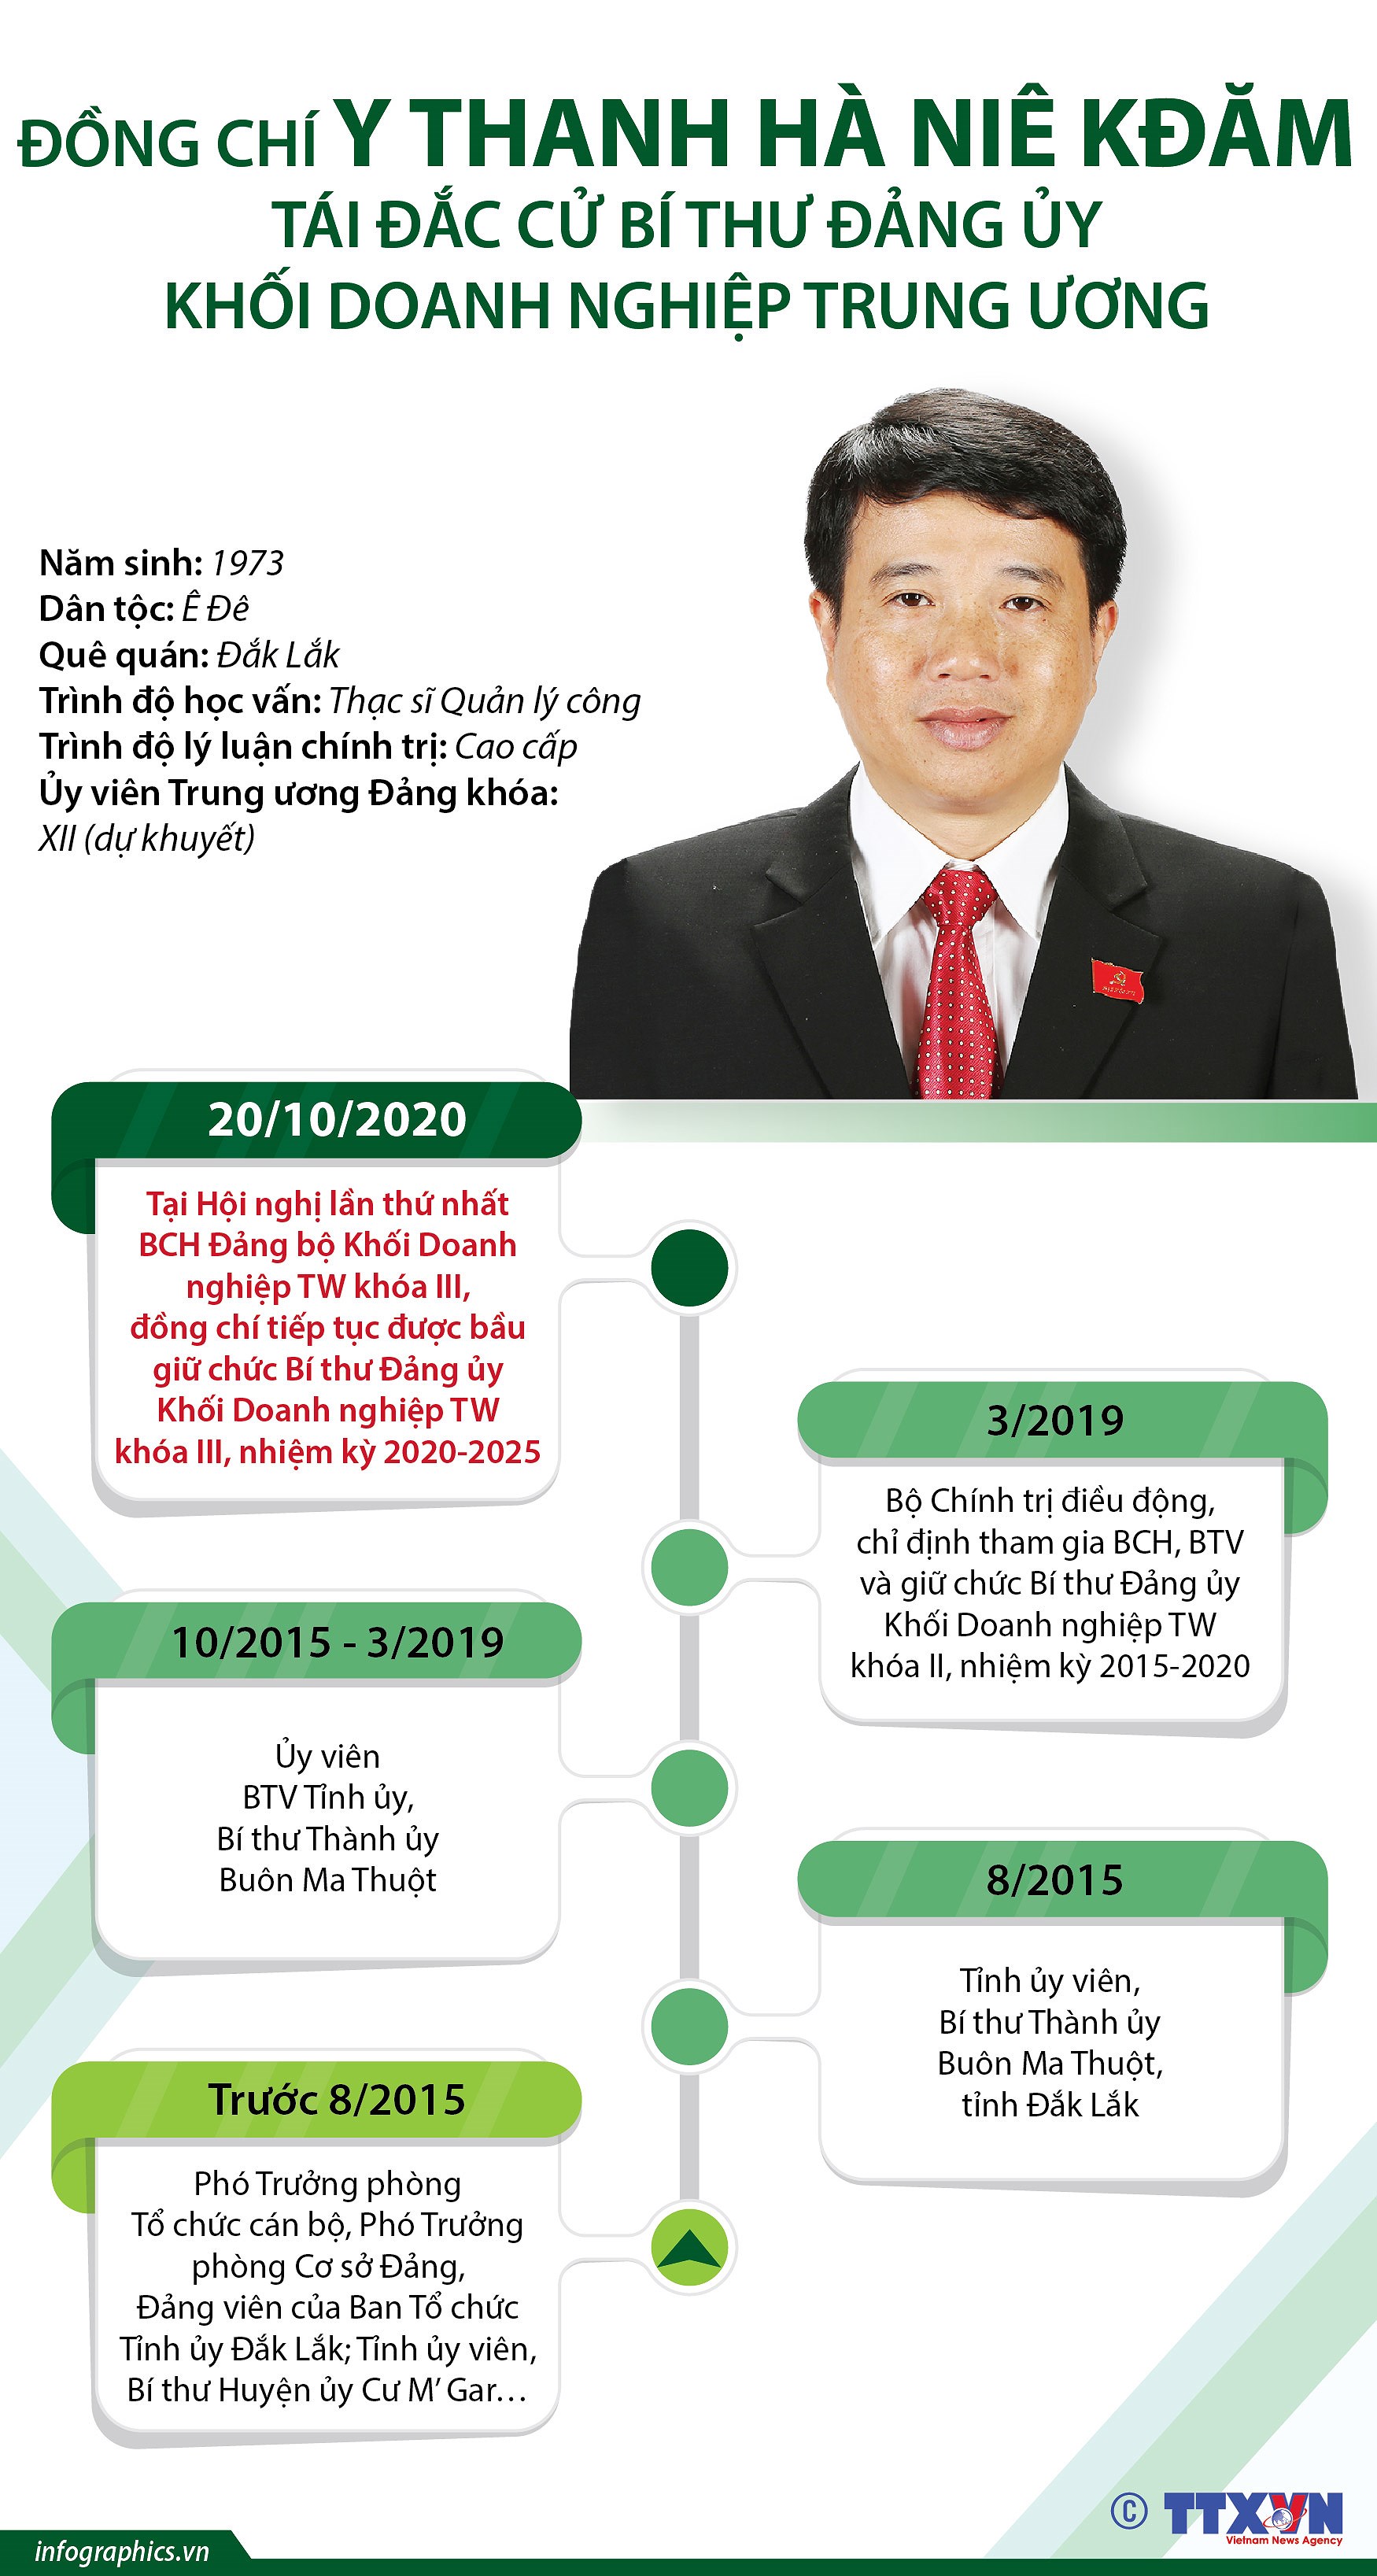 [Infographics] Bi thu Dang uy Khoi Doanh nghiep TW Y Thanh Ha Nie Kdam hinh anh 1